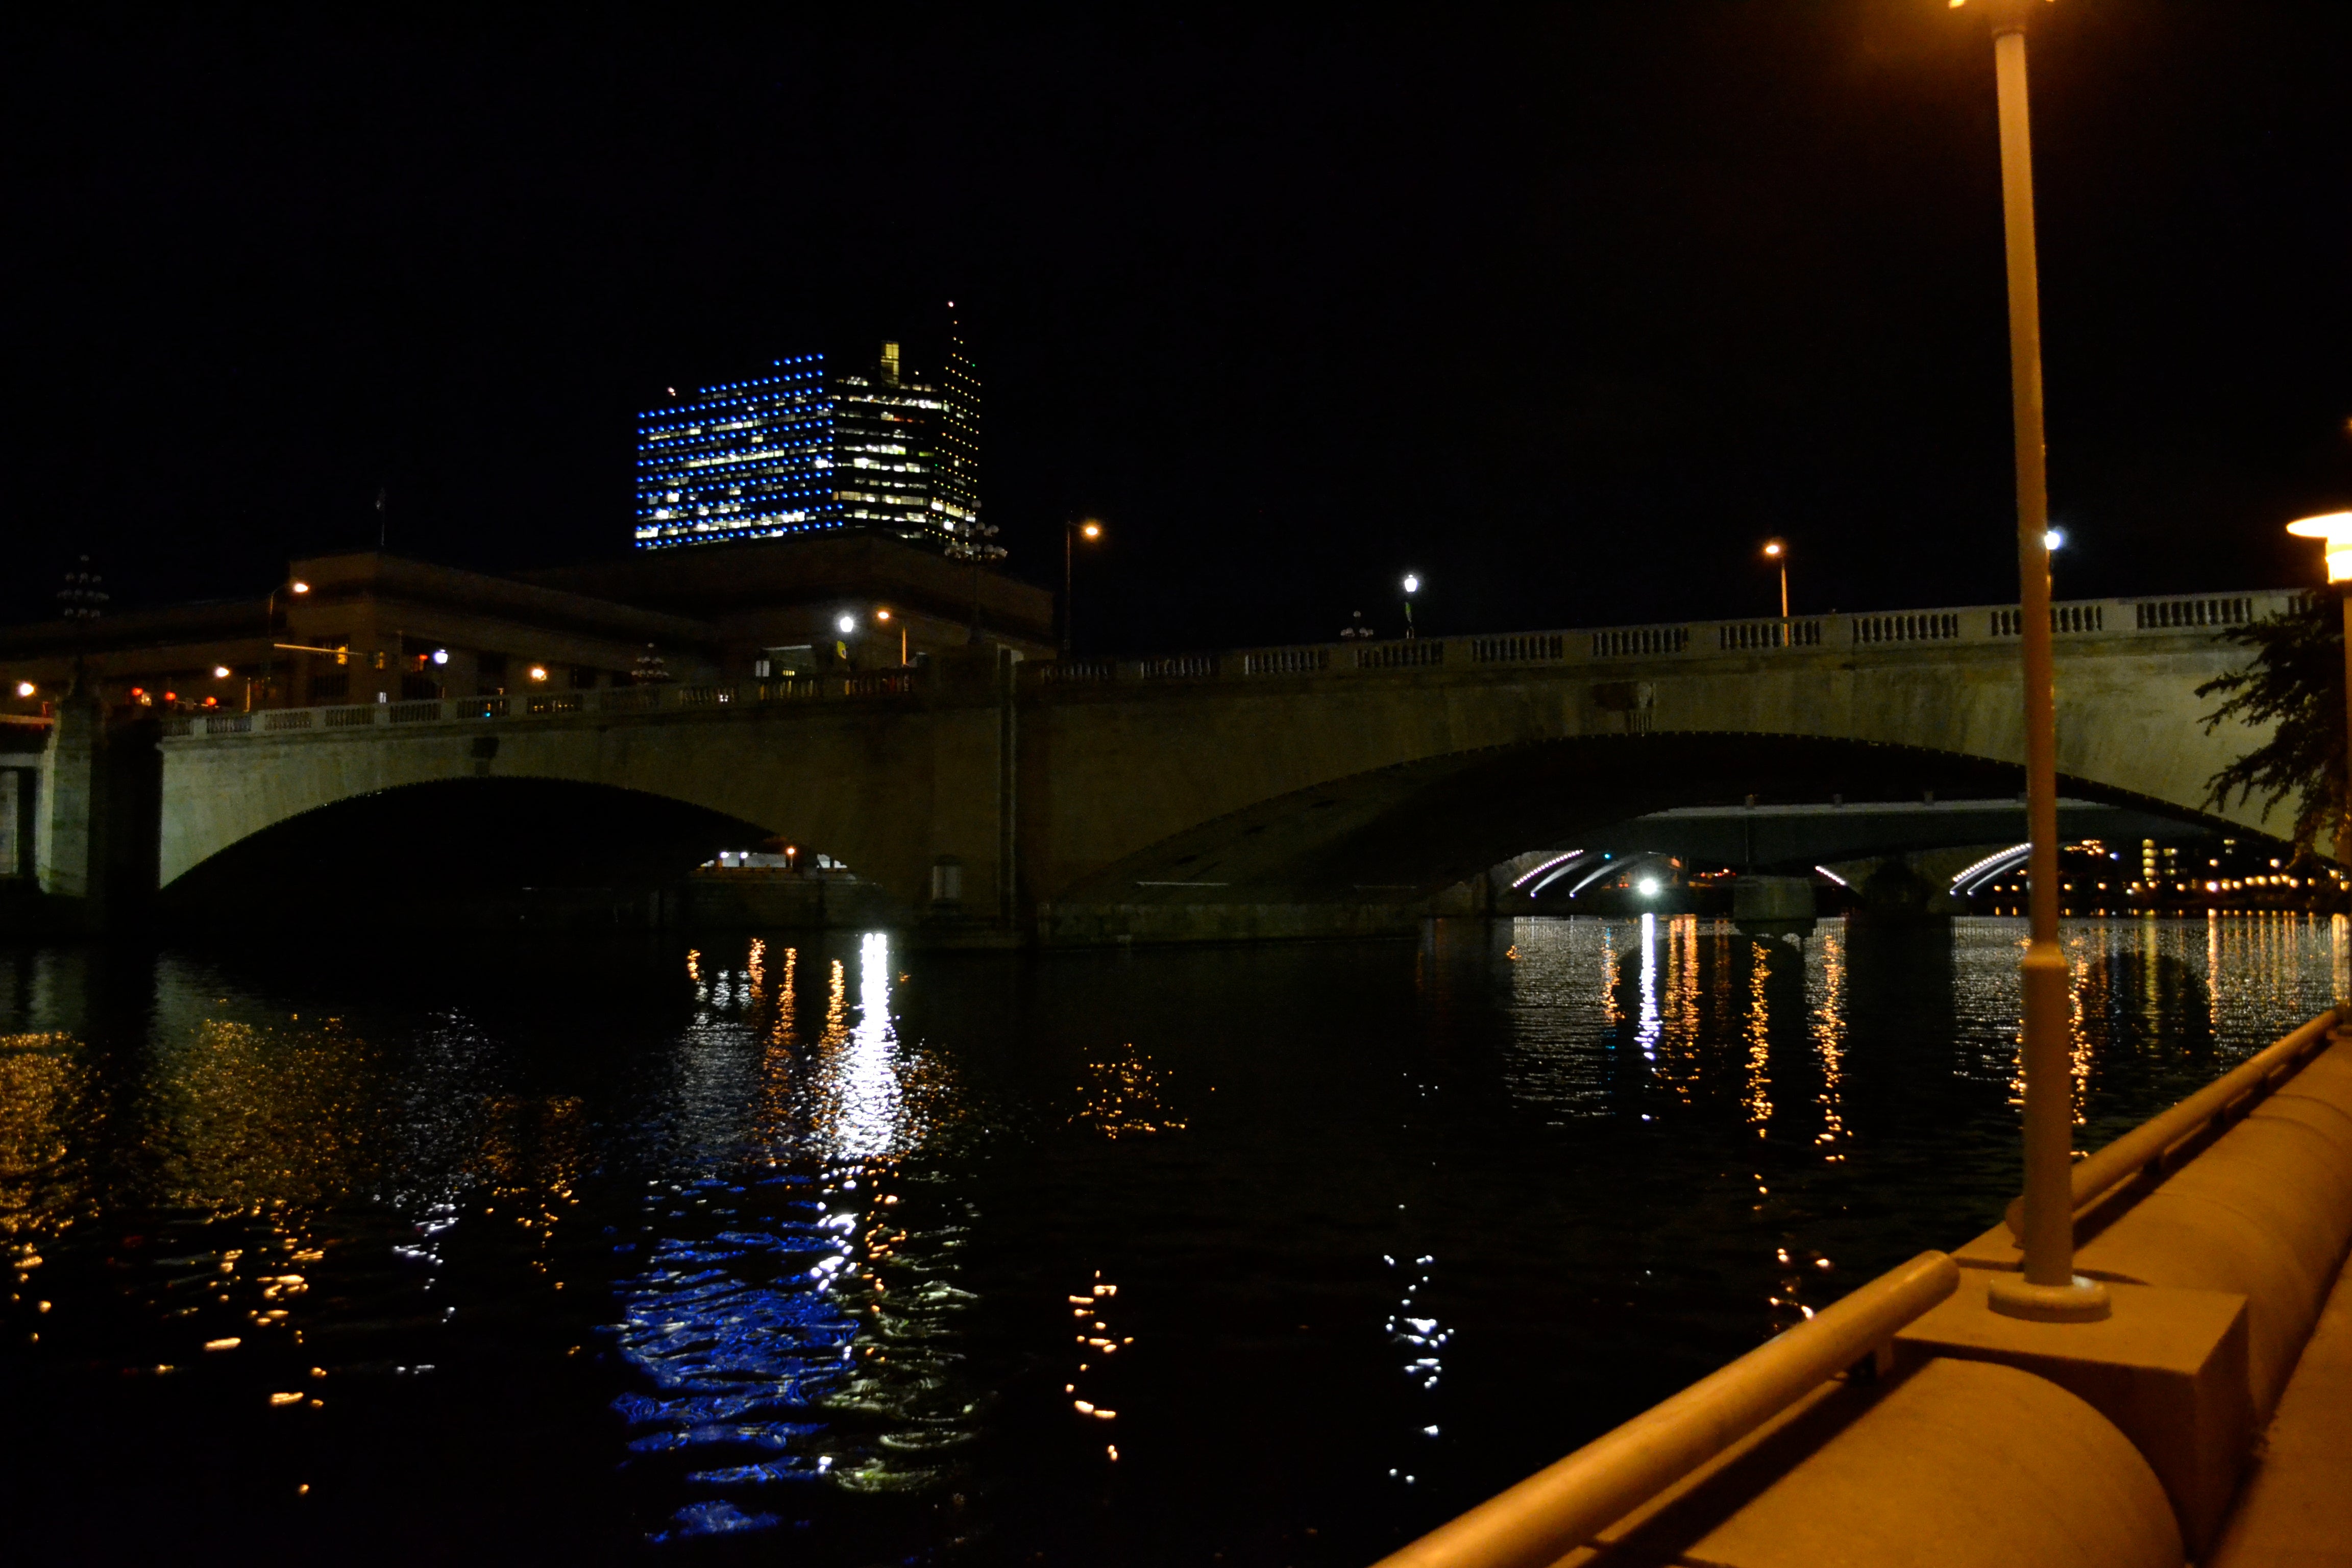 30th Street Bridge pre-lighting